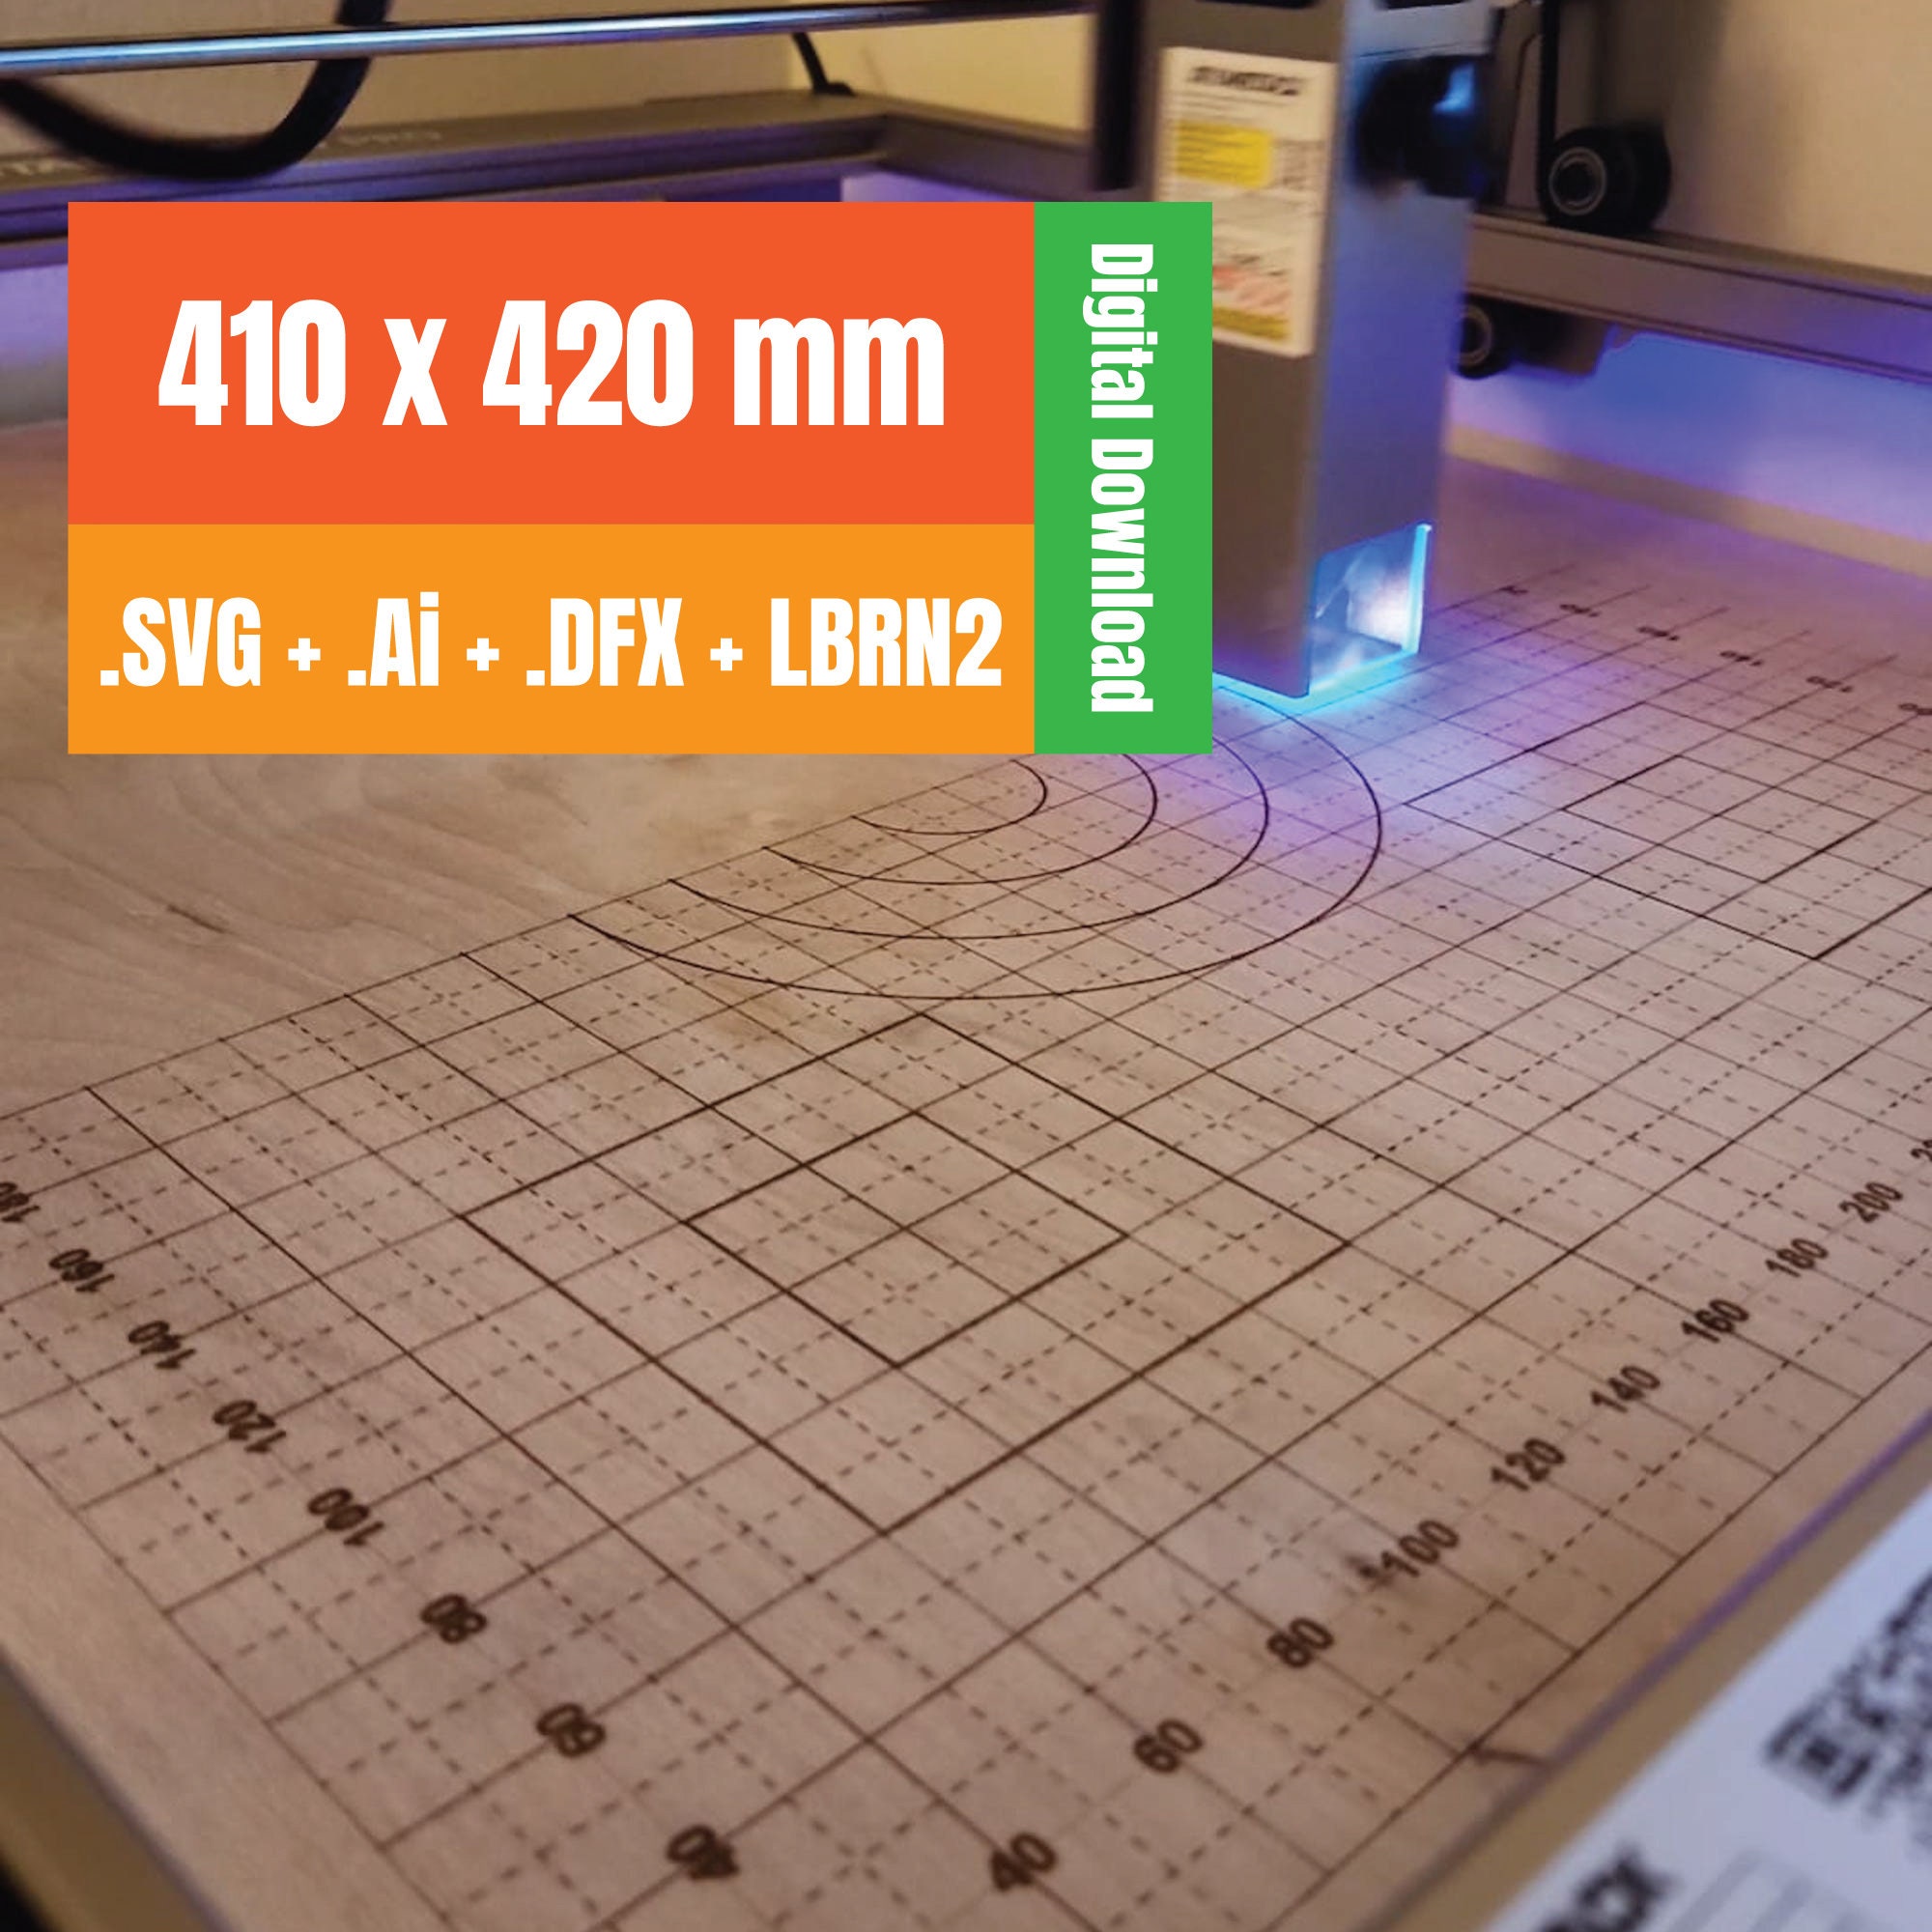 Thunder Laser Honeycomb Bed Work Holding Pin .45 / 11.5mm DIY / 3D